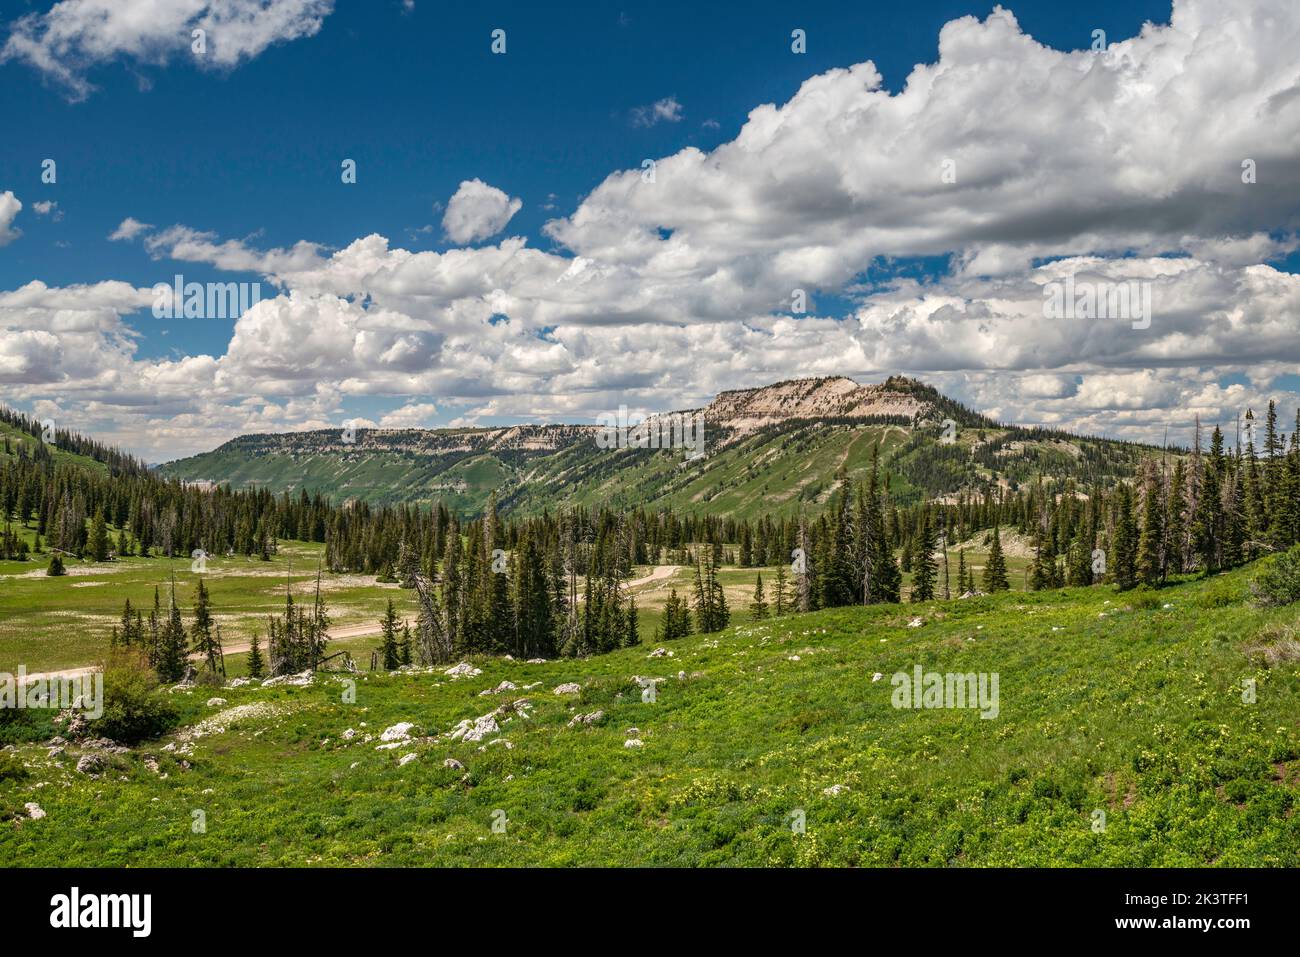 Black Mountain in dist, Hightop sulla destra, vista da Skyline Drive, attraverso Twelvemile Flat, Wasatch Plateau, Manti la SAL National Forest, Utah, USA Foto Stock